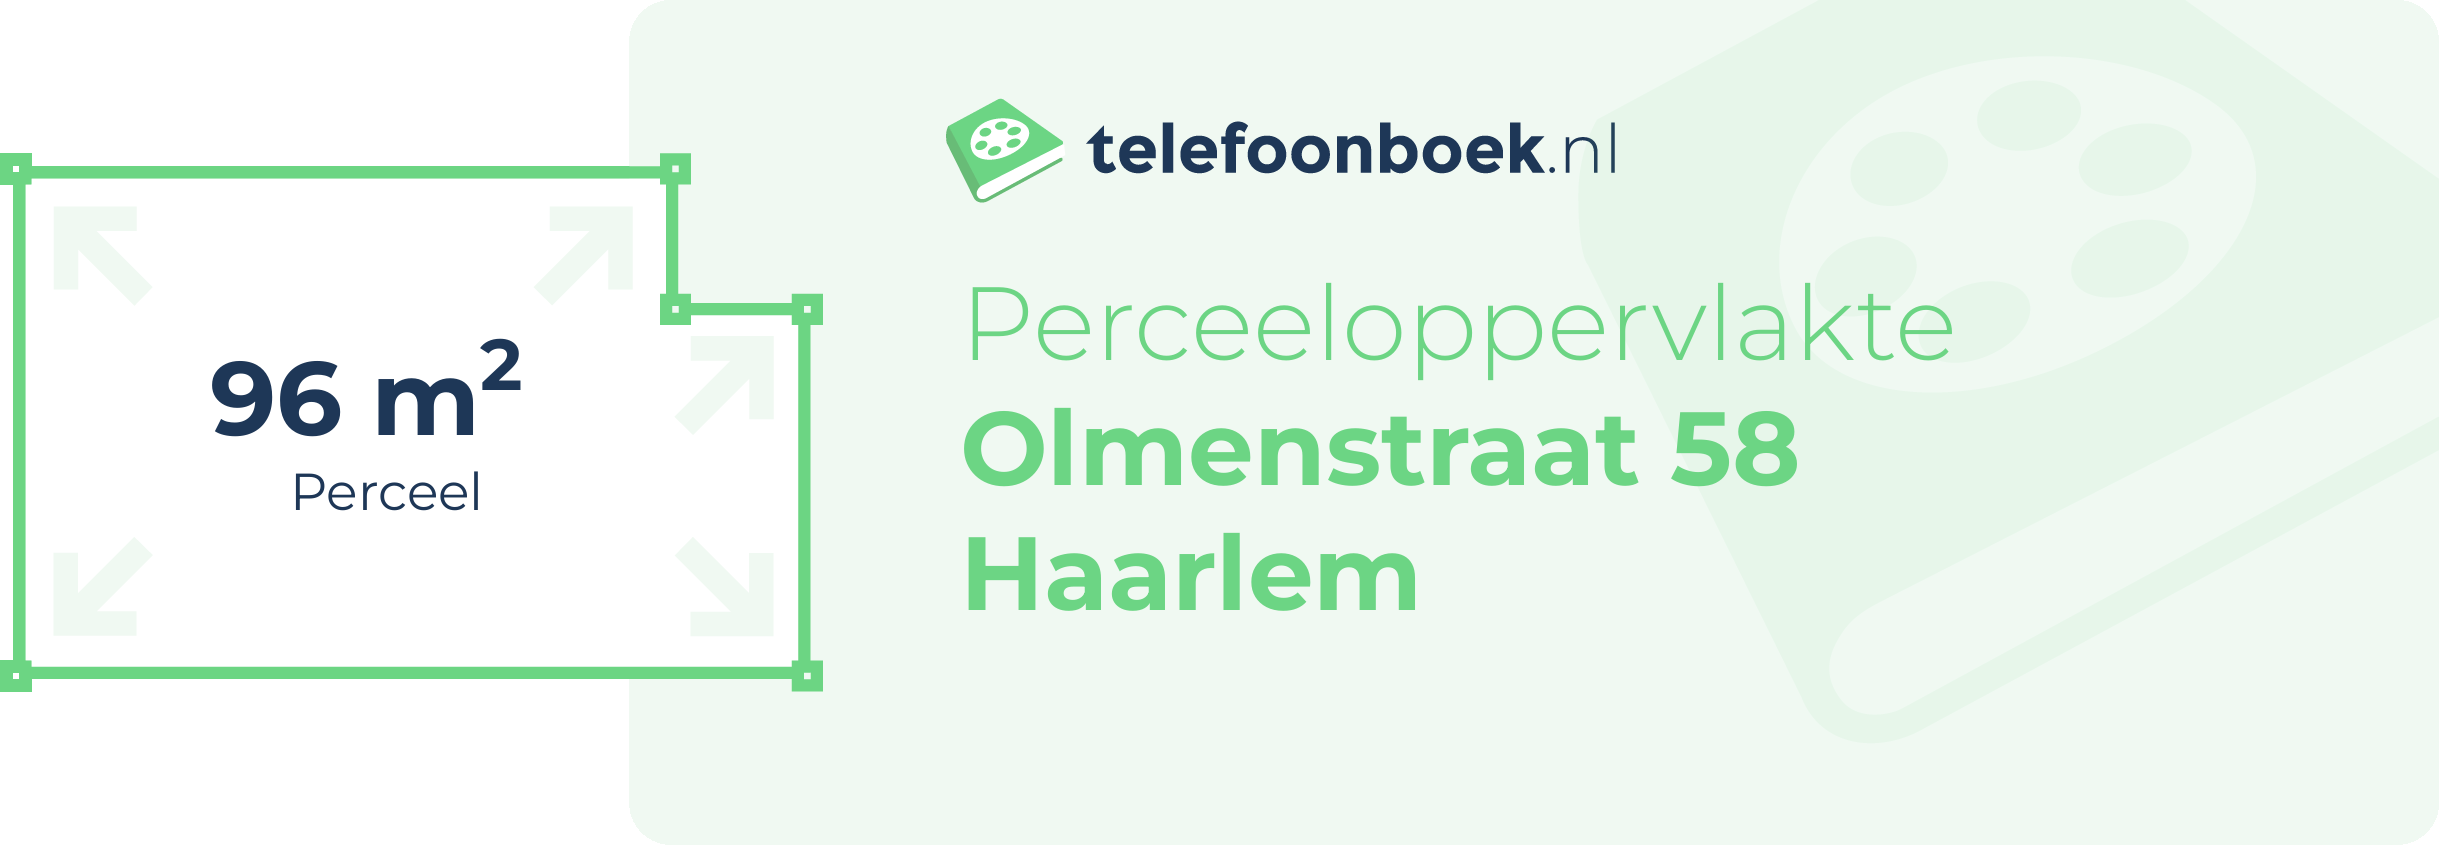 Perceeloppervlakte Olmenstraat 58 Haarlem